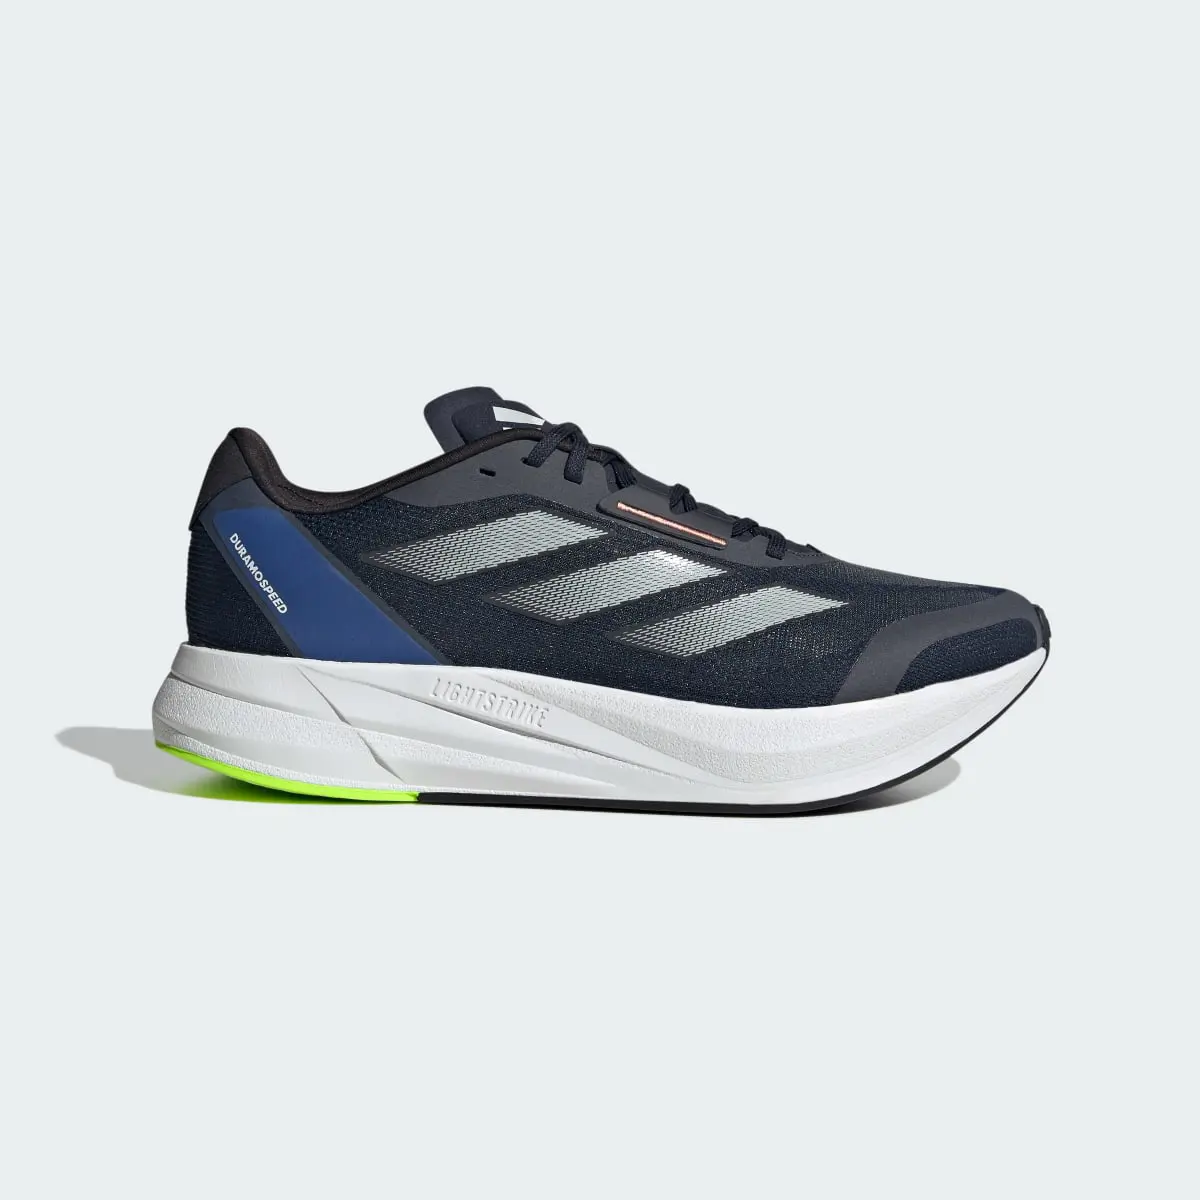 Adidas Duramo Speed Shoes. 2